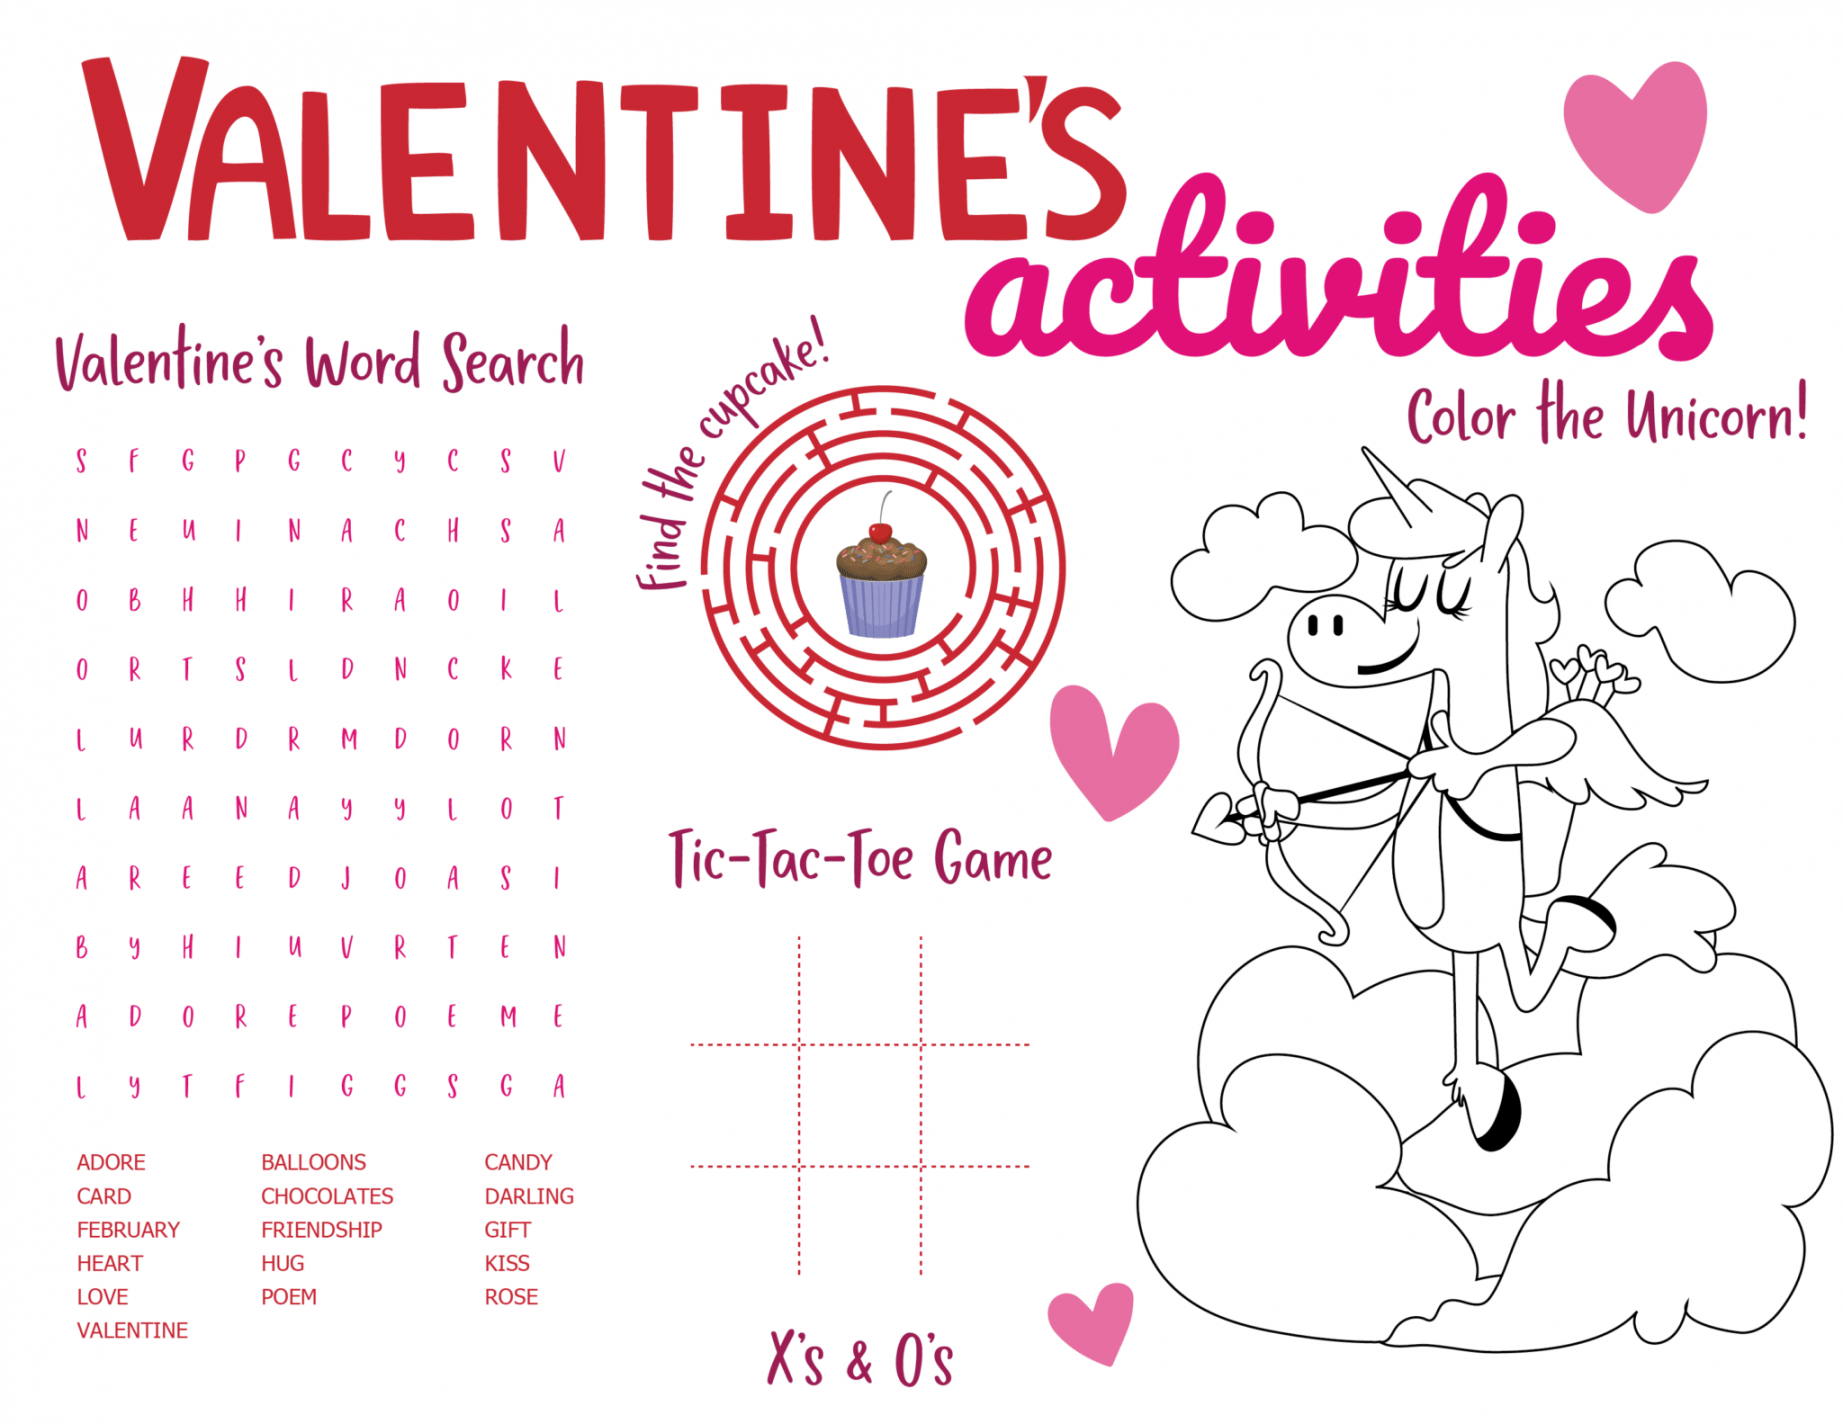 Valentines Day Worksheet Printables To Use - FREE Printables - FREE Printables - Free Printable Valentine